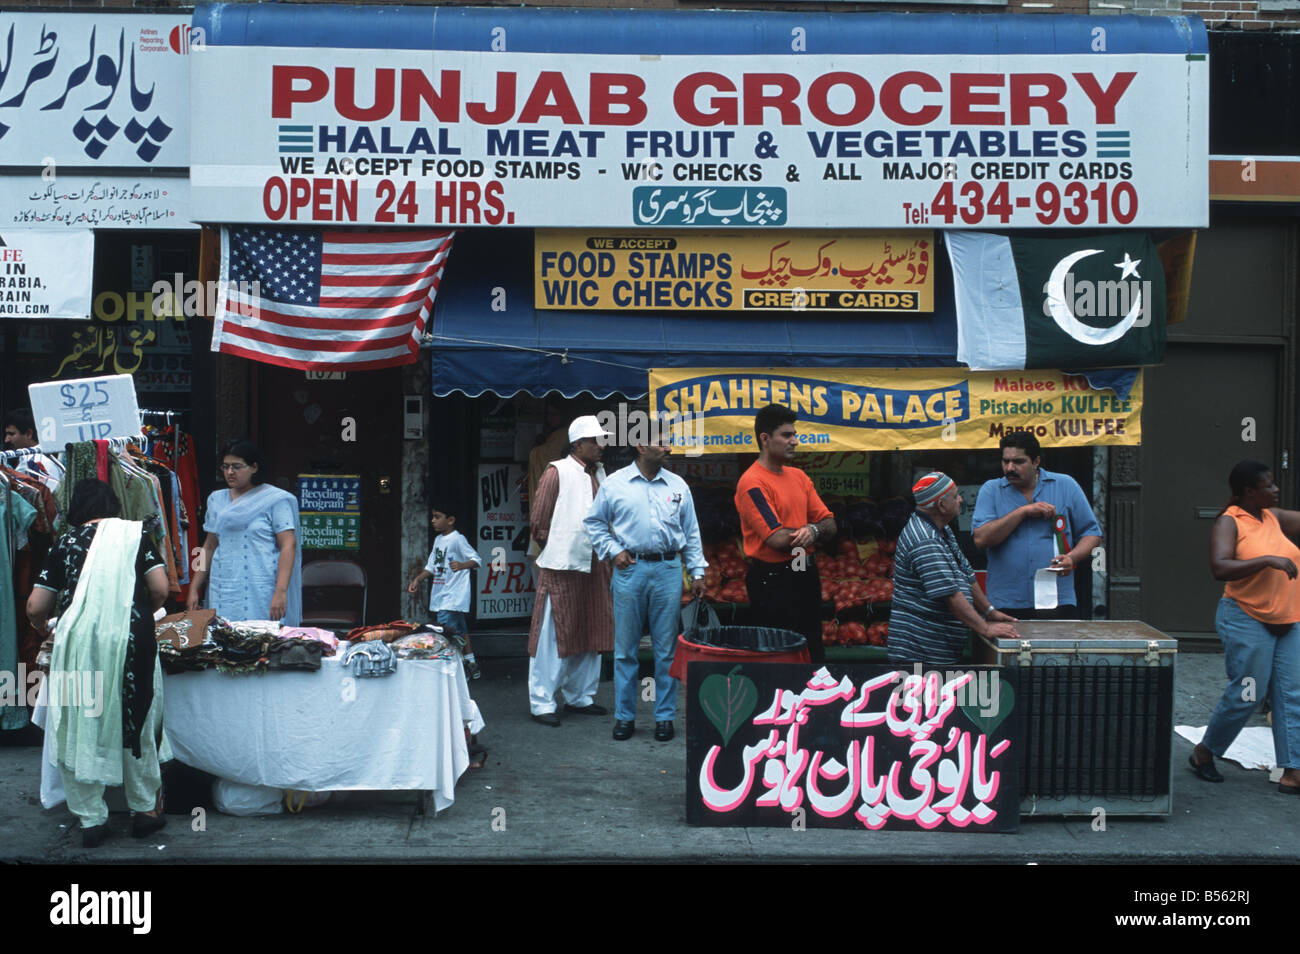 Grocery store in a Pakistani neighborhood on Coney Island Avenue in Brooklyn New York Stock Photo